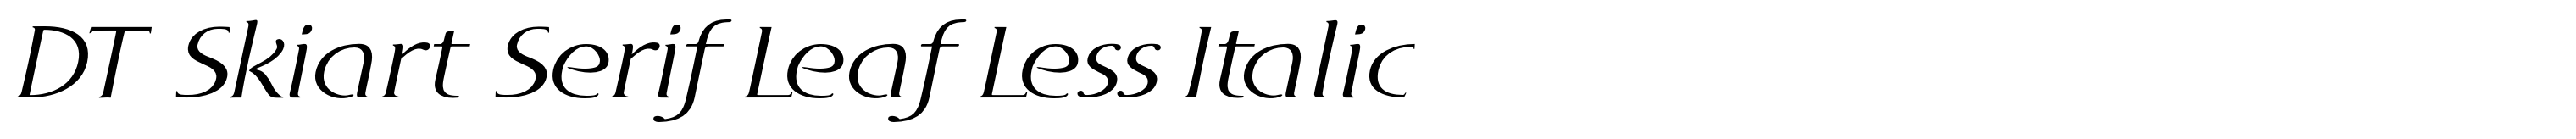 DT Skiart Serif Leaf Less Italic